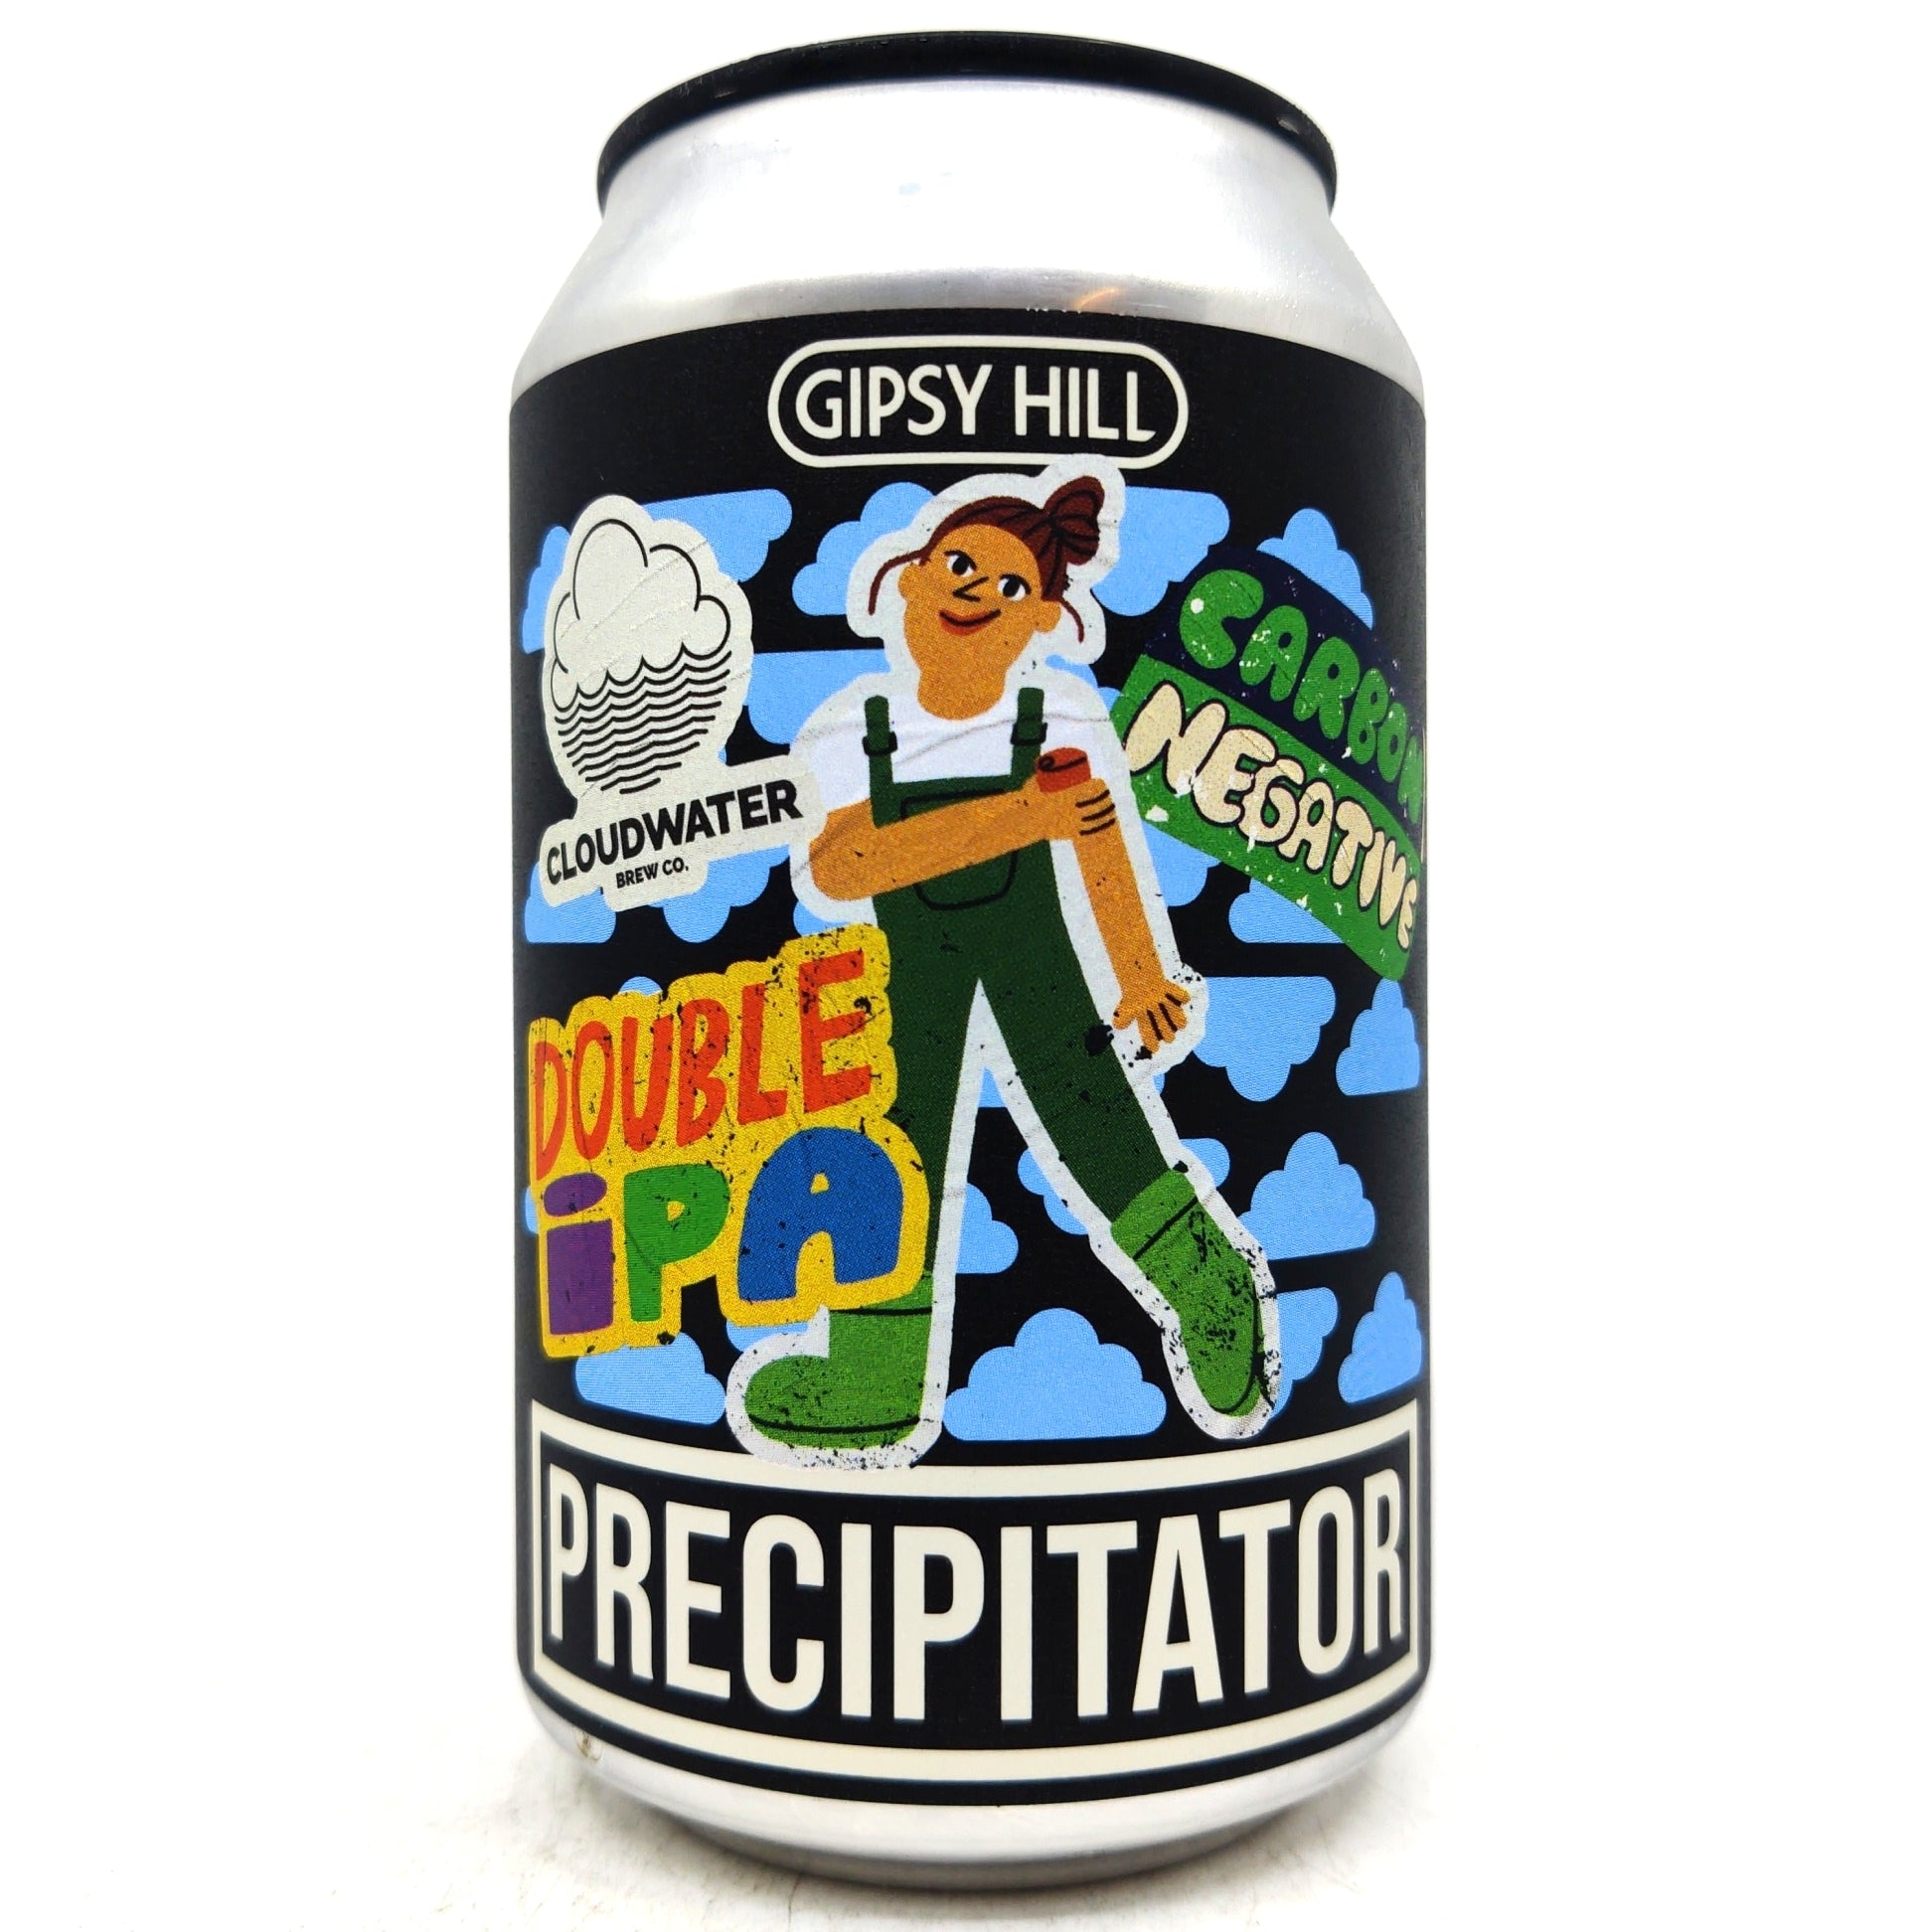 Gipsy Hill x Cloudwater Precipitator Double IPA 8% (330ml can)-Hop Burns & Black